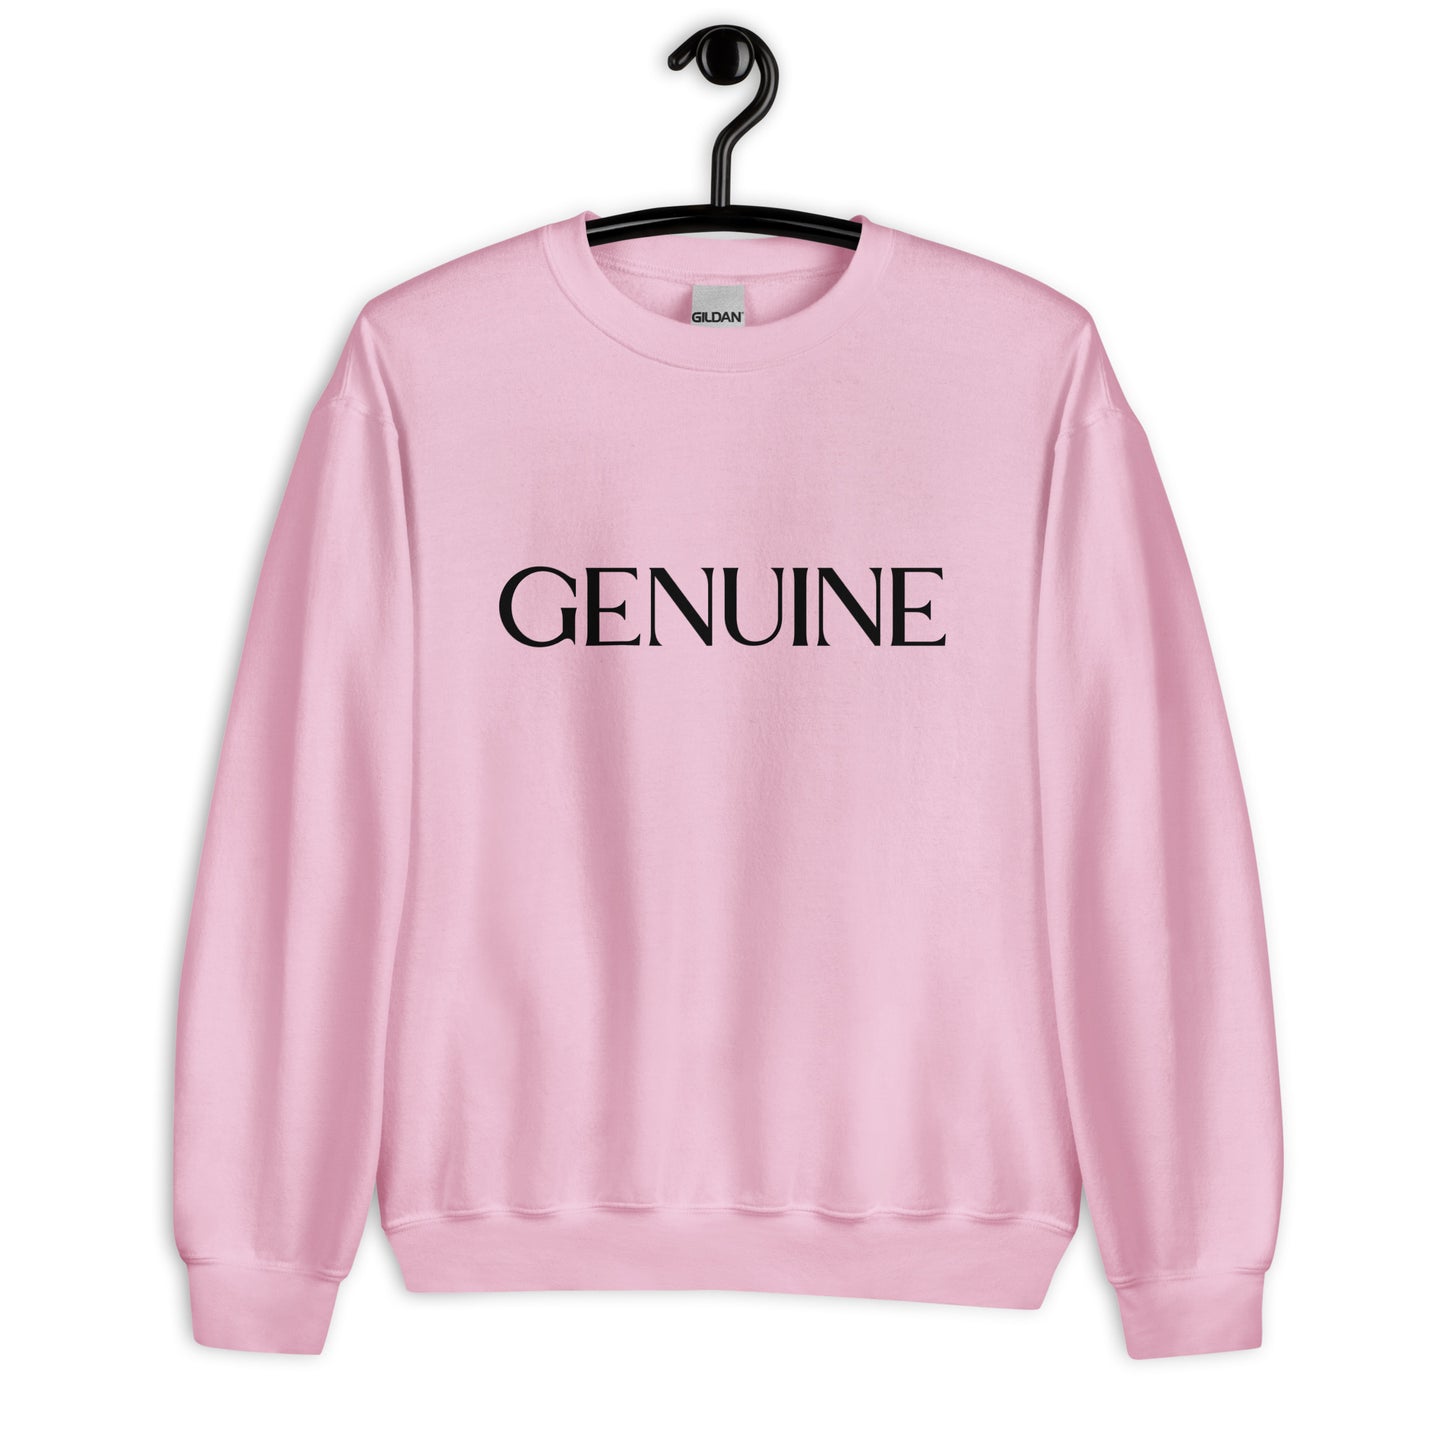 Genuine- Sweatshirt